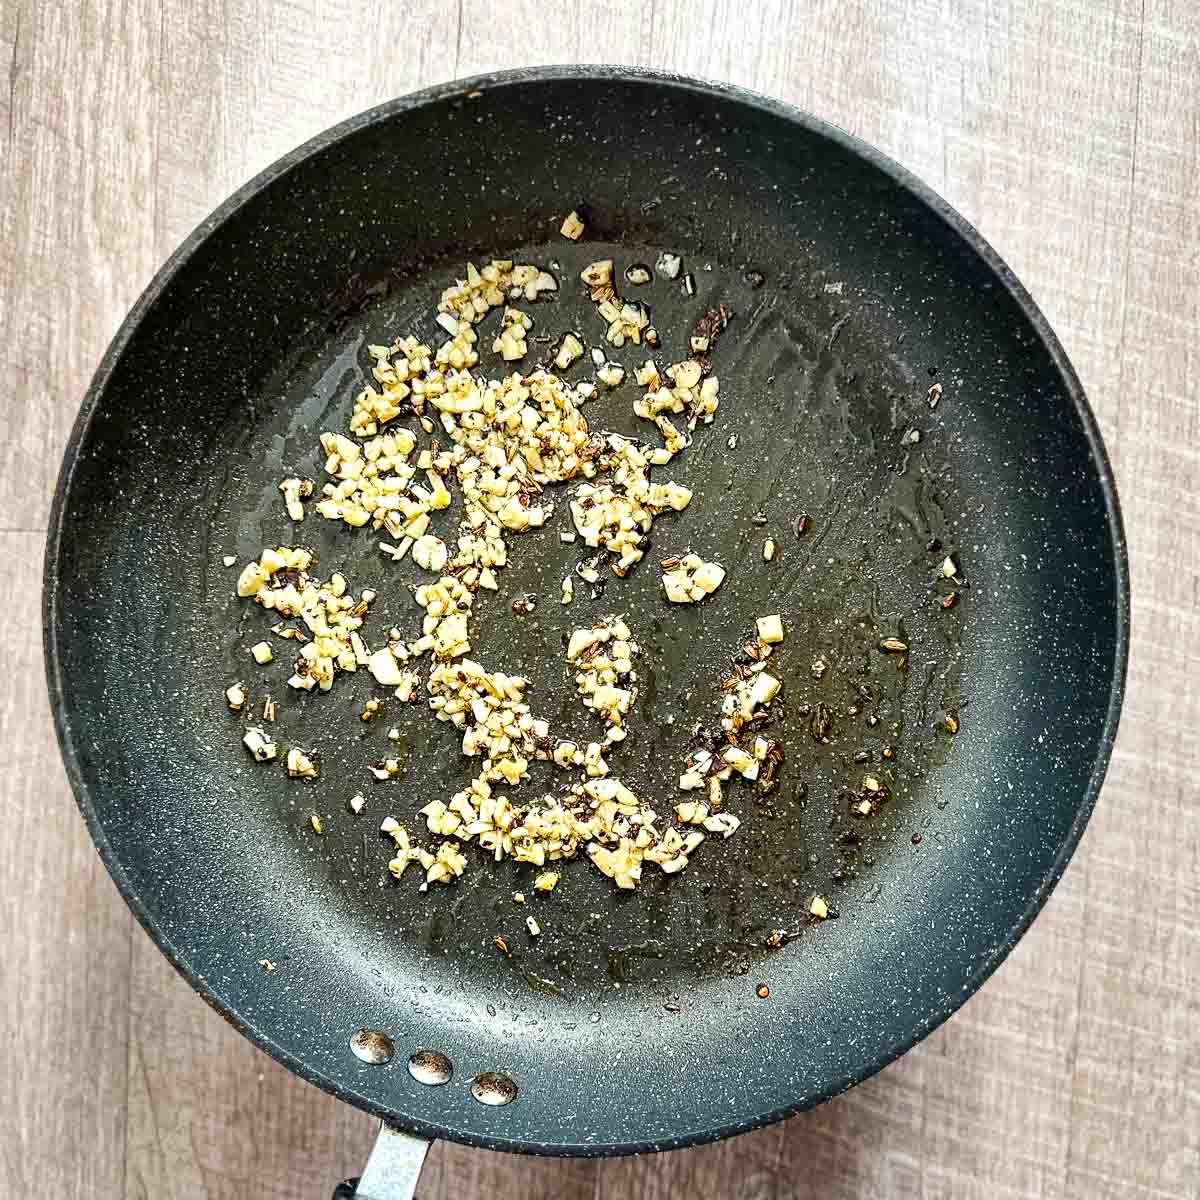 Garlic cooking in oil in a frying pan.